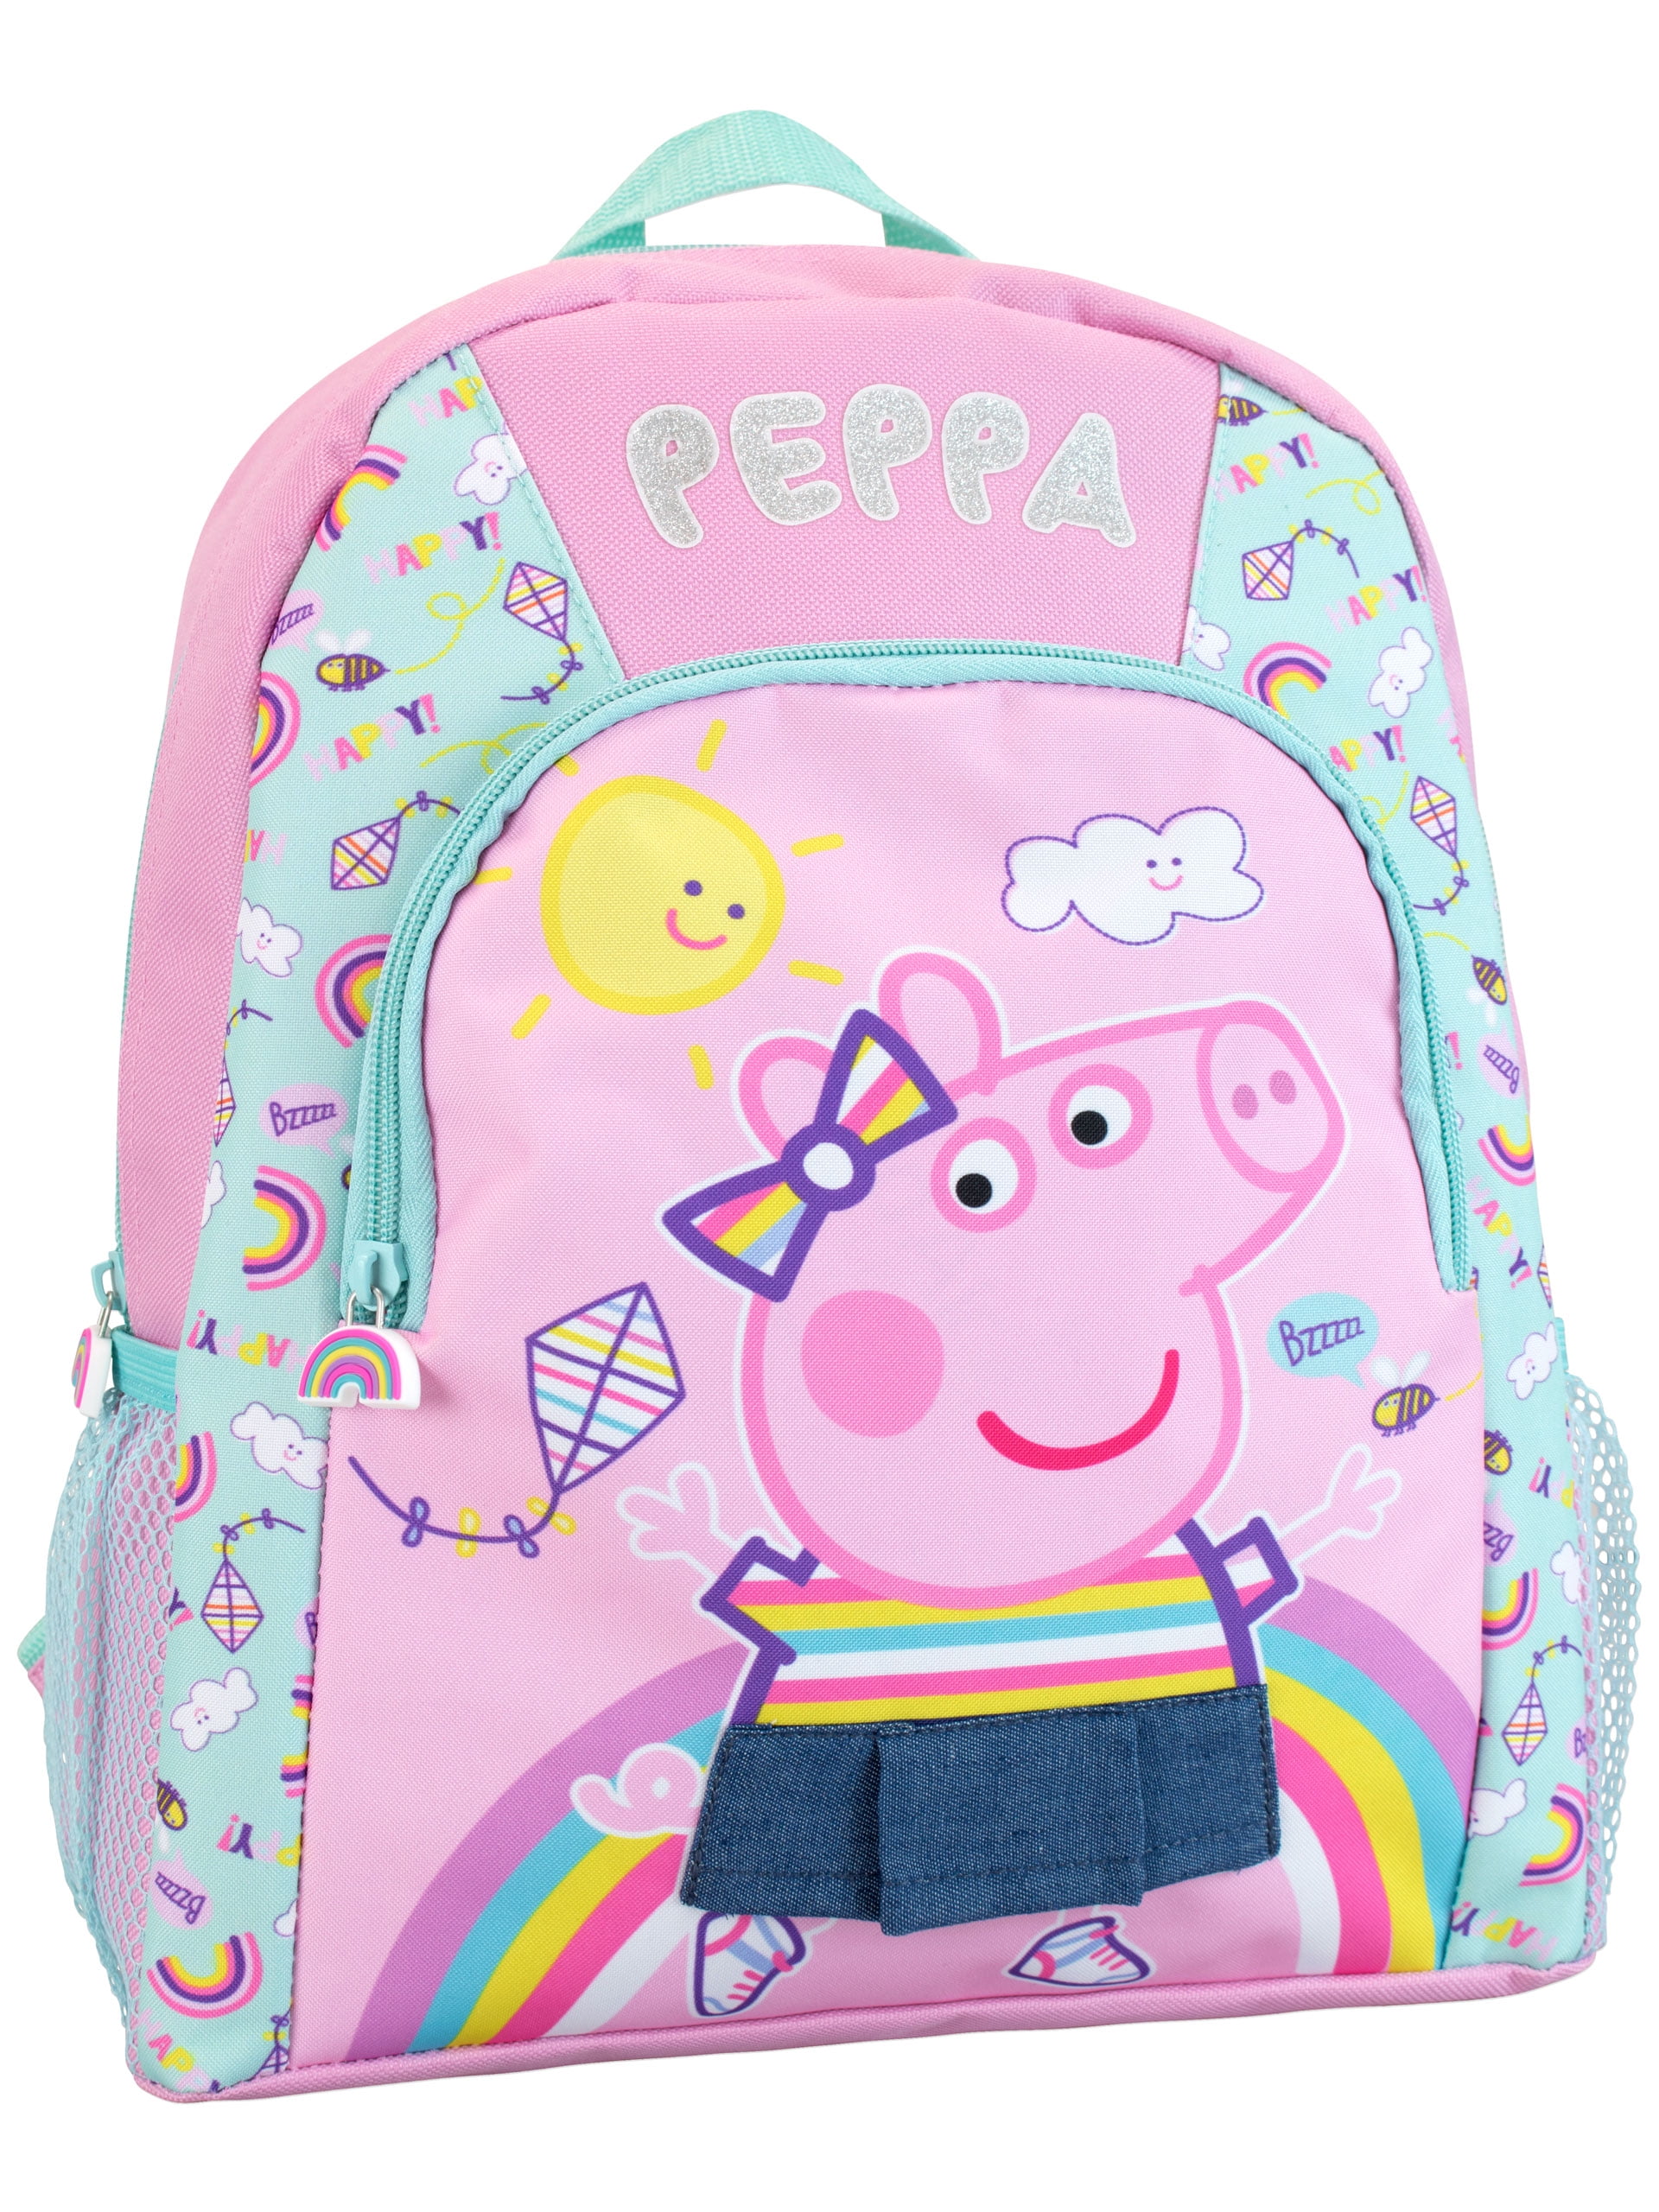 Peppa Big Cooler Bag | Thimble Toys